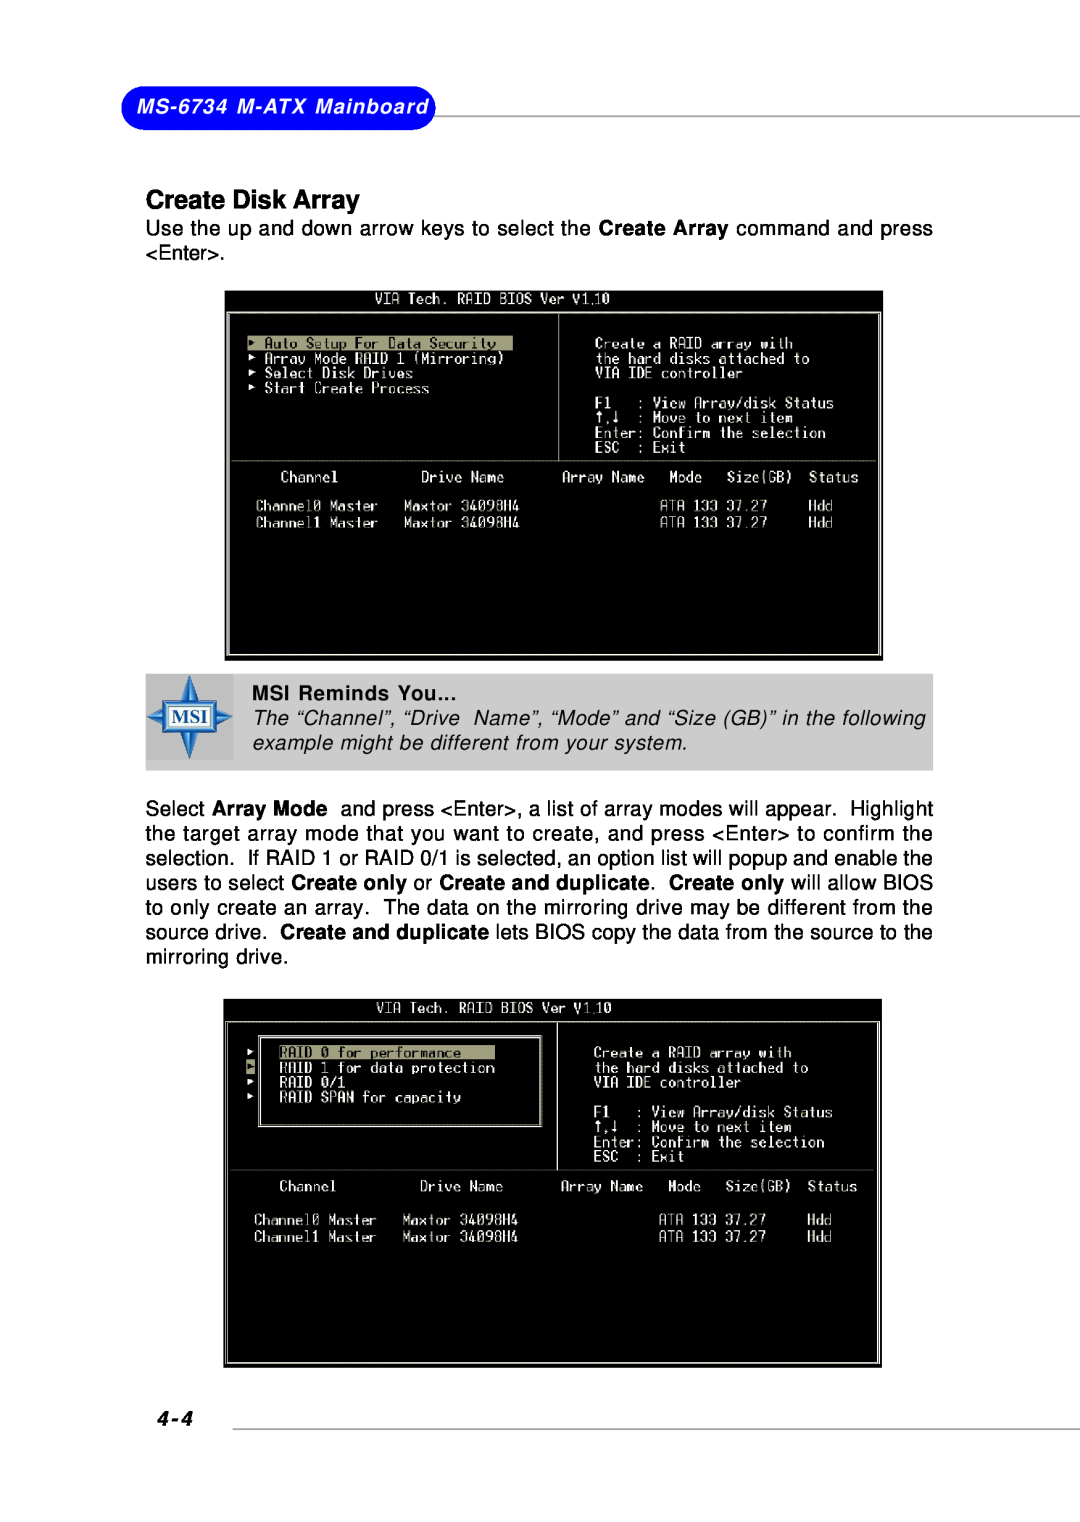 Intel G52-M6734XD, KM4M, KM4AM manual Create Disk Array, MS-6734 M-ATX Mainboard, MSI Reminds You 